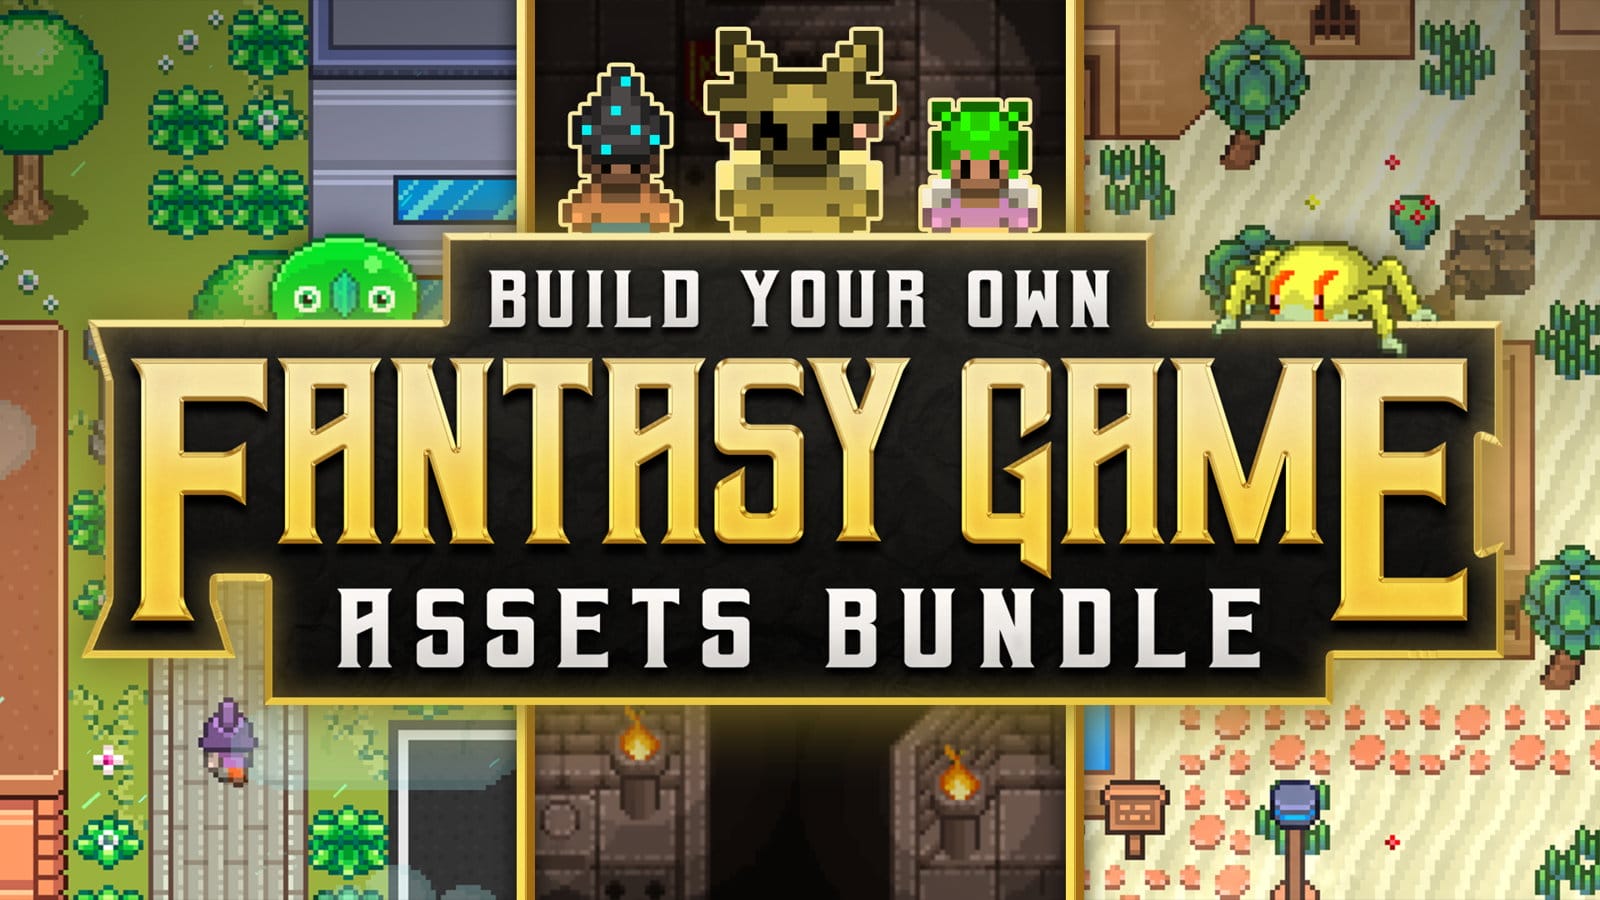 Build Your Own Fantasy Game Assets Bundle